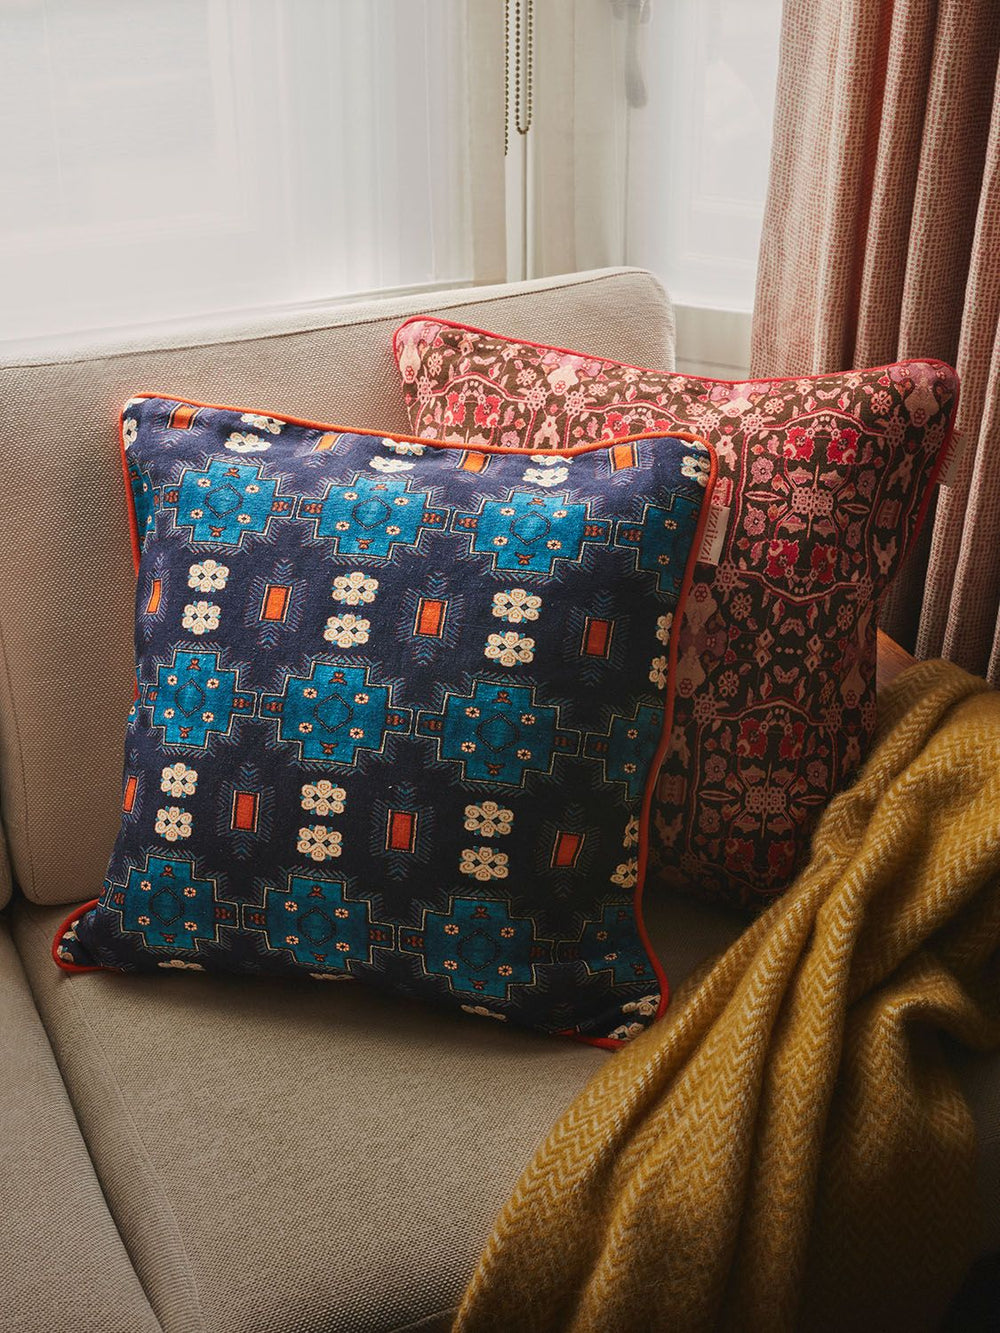 izziizzi-linen-cushions-geometric-astec-design-british-made-uk-designer-blue-orange-aztec-design-navy